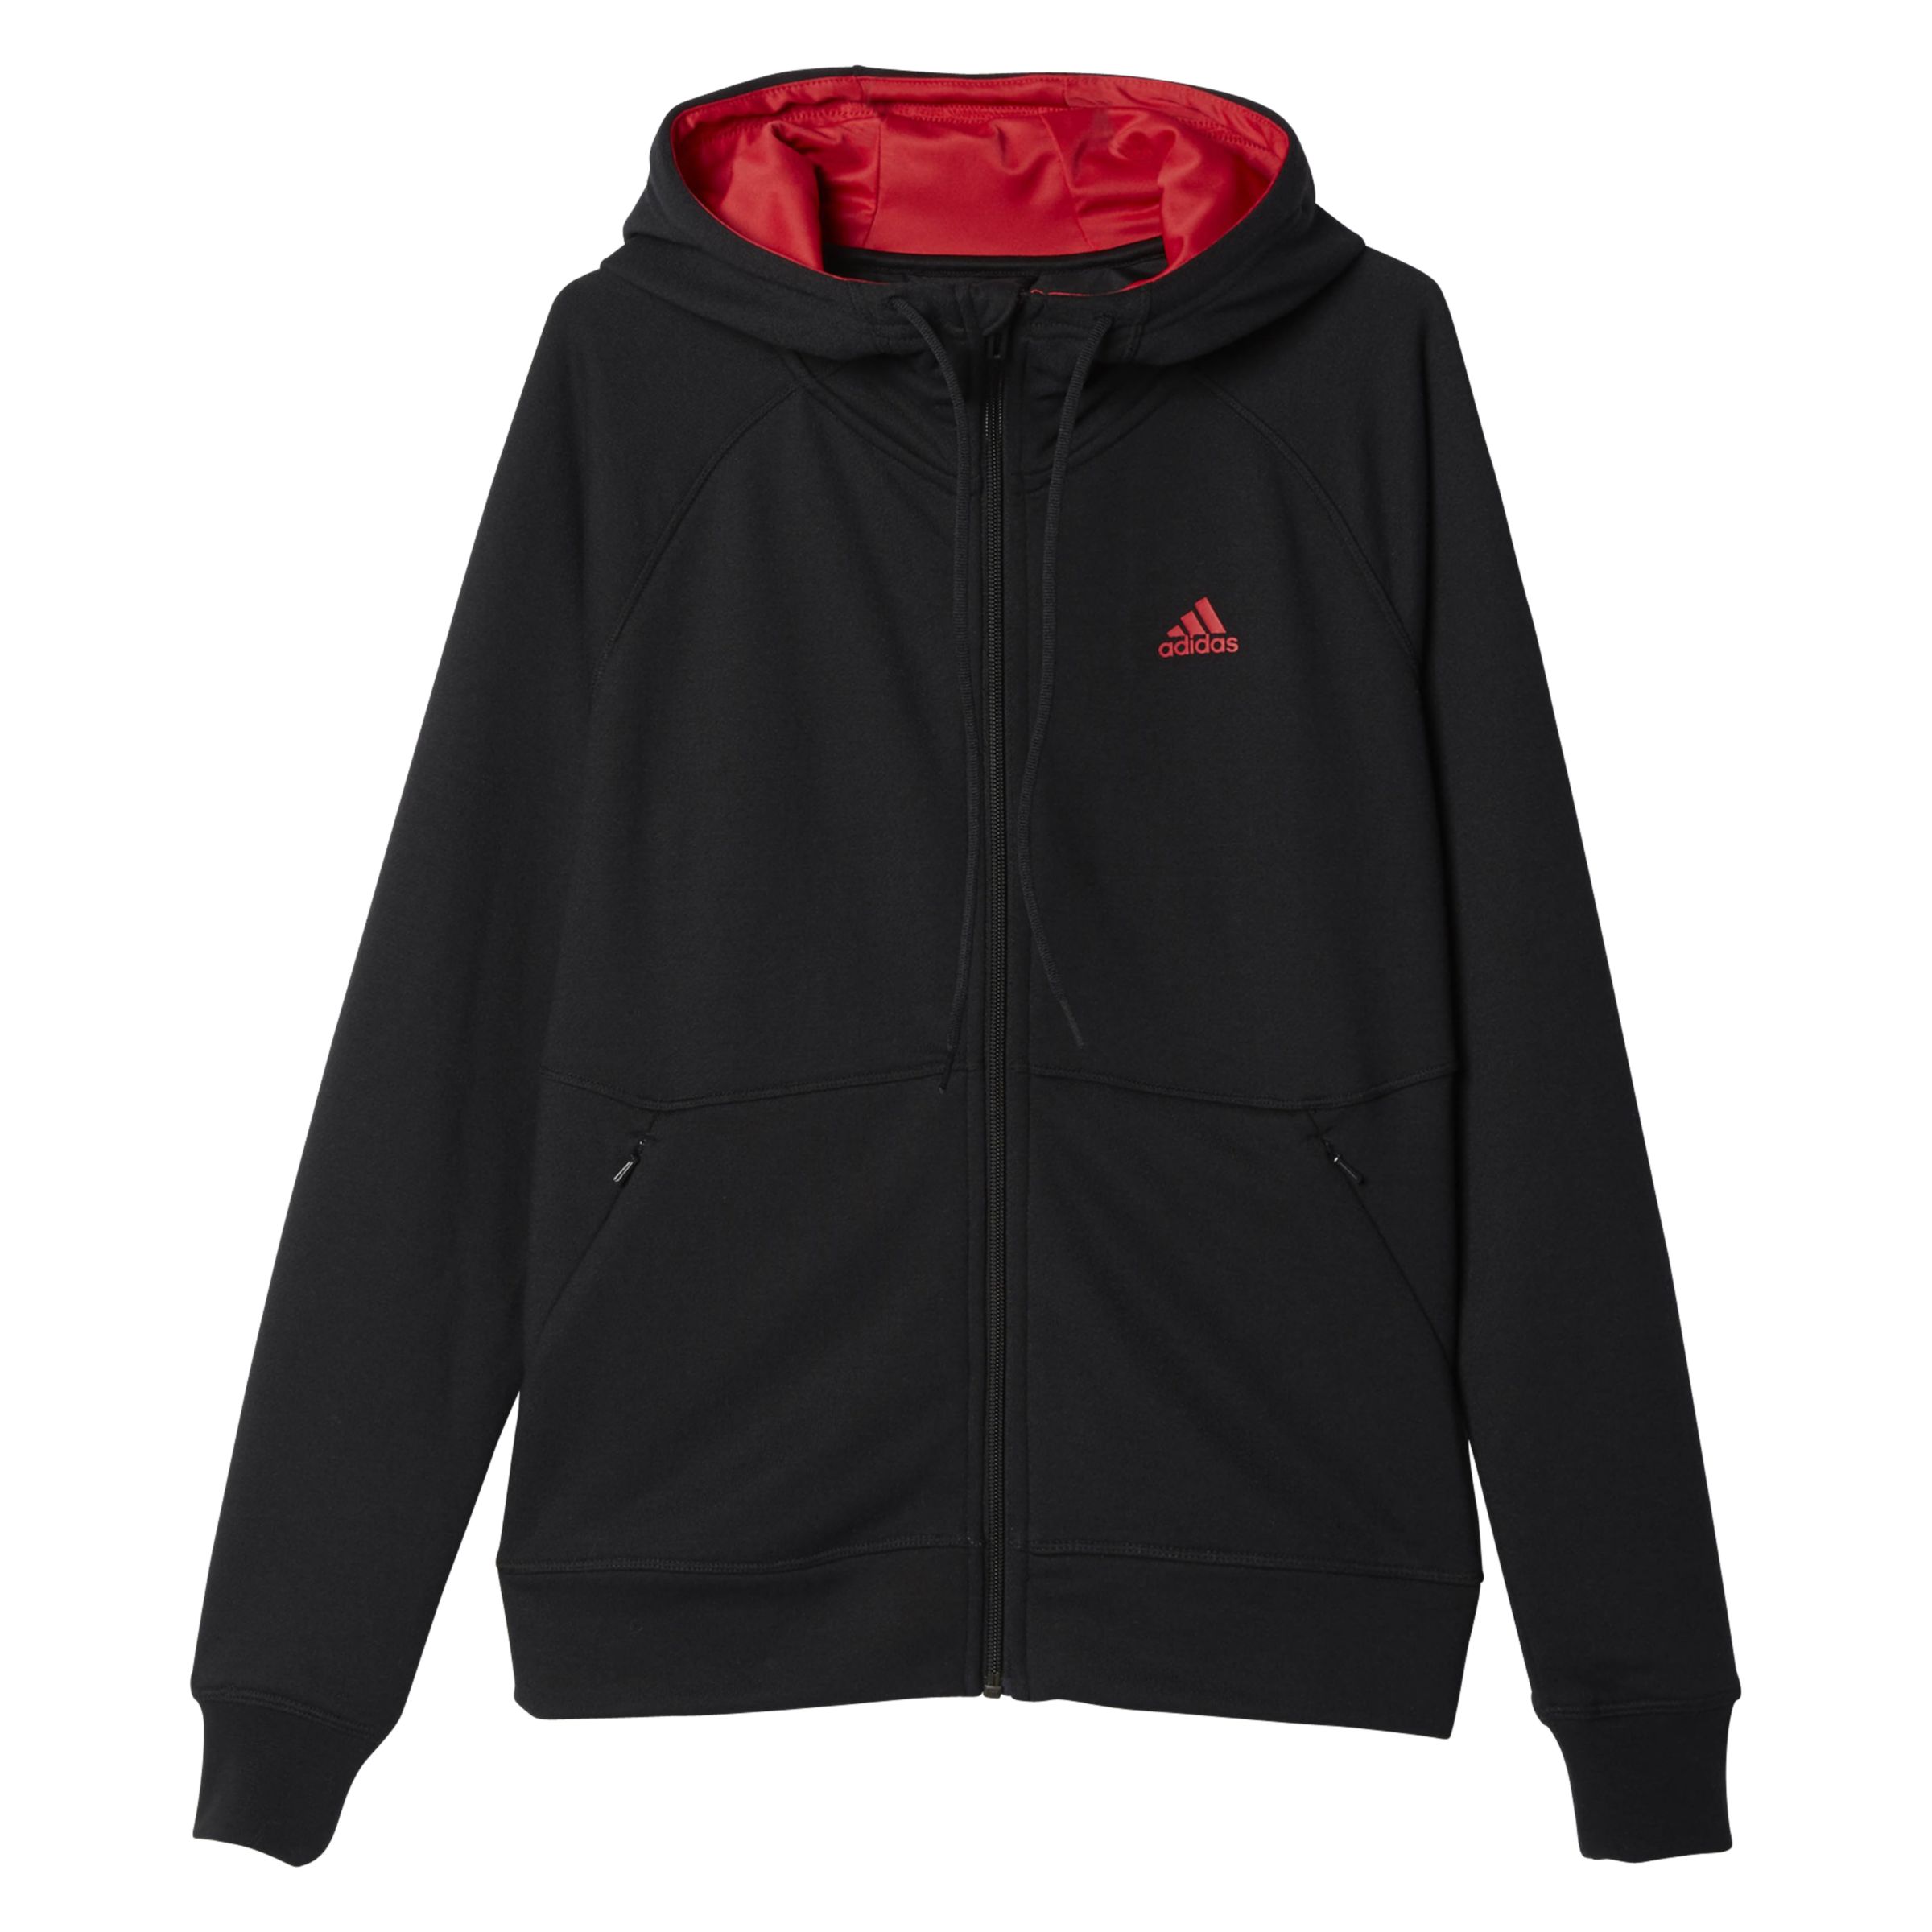 adidas hoodie black and red